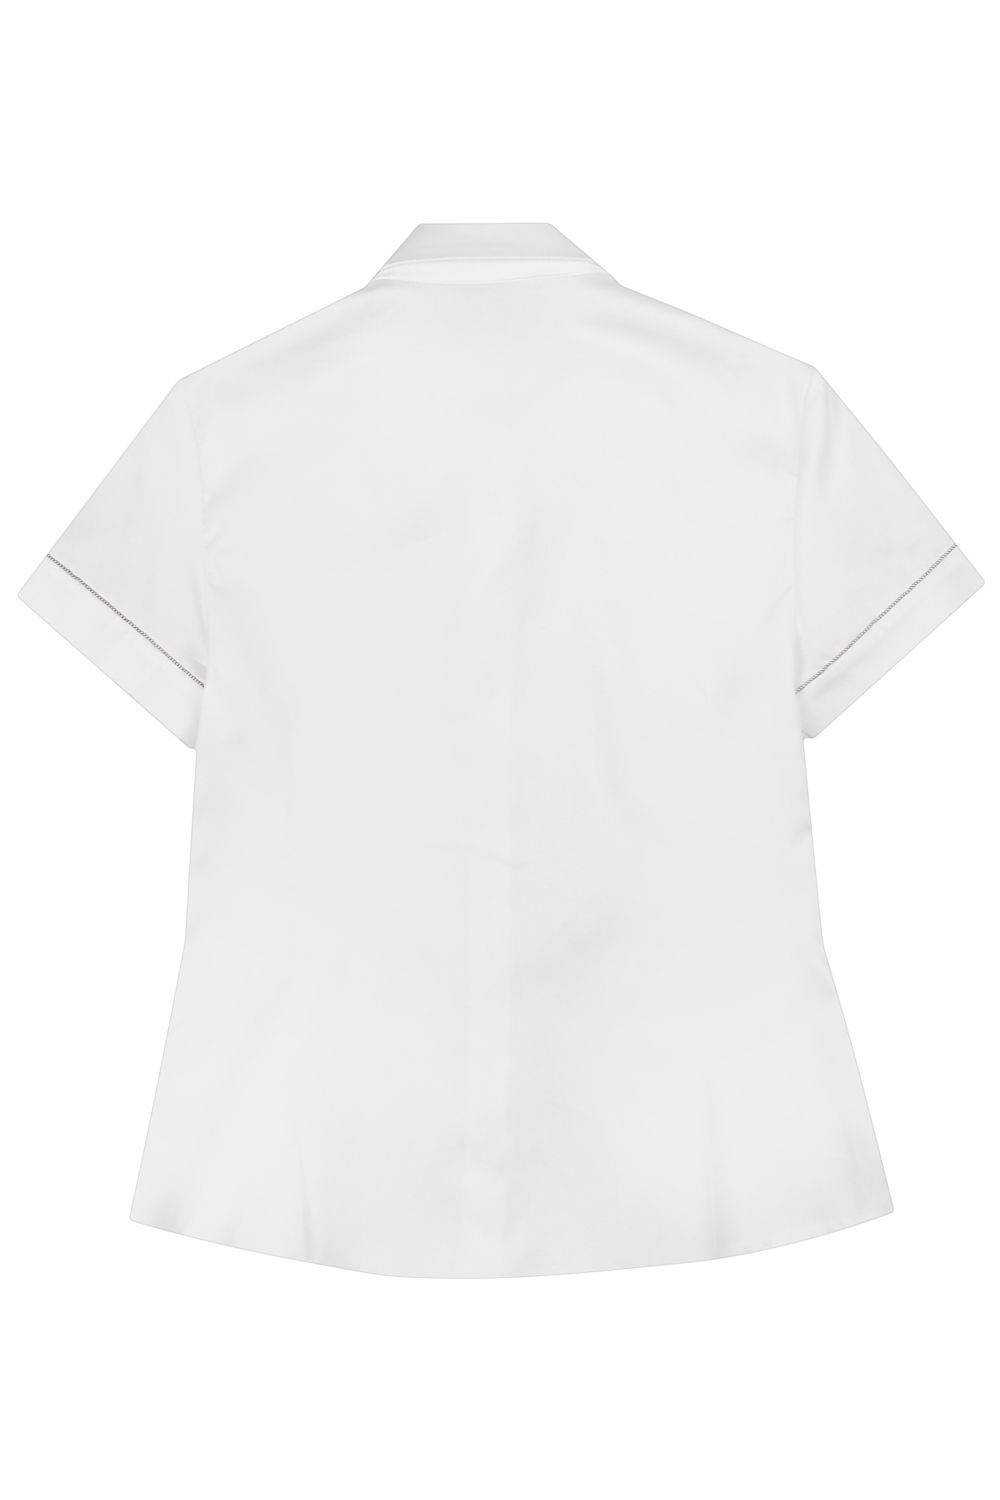 Блуза Noble People, размер 122, цвет белый 29503-349 - фото 4